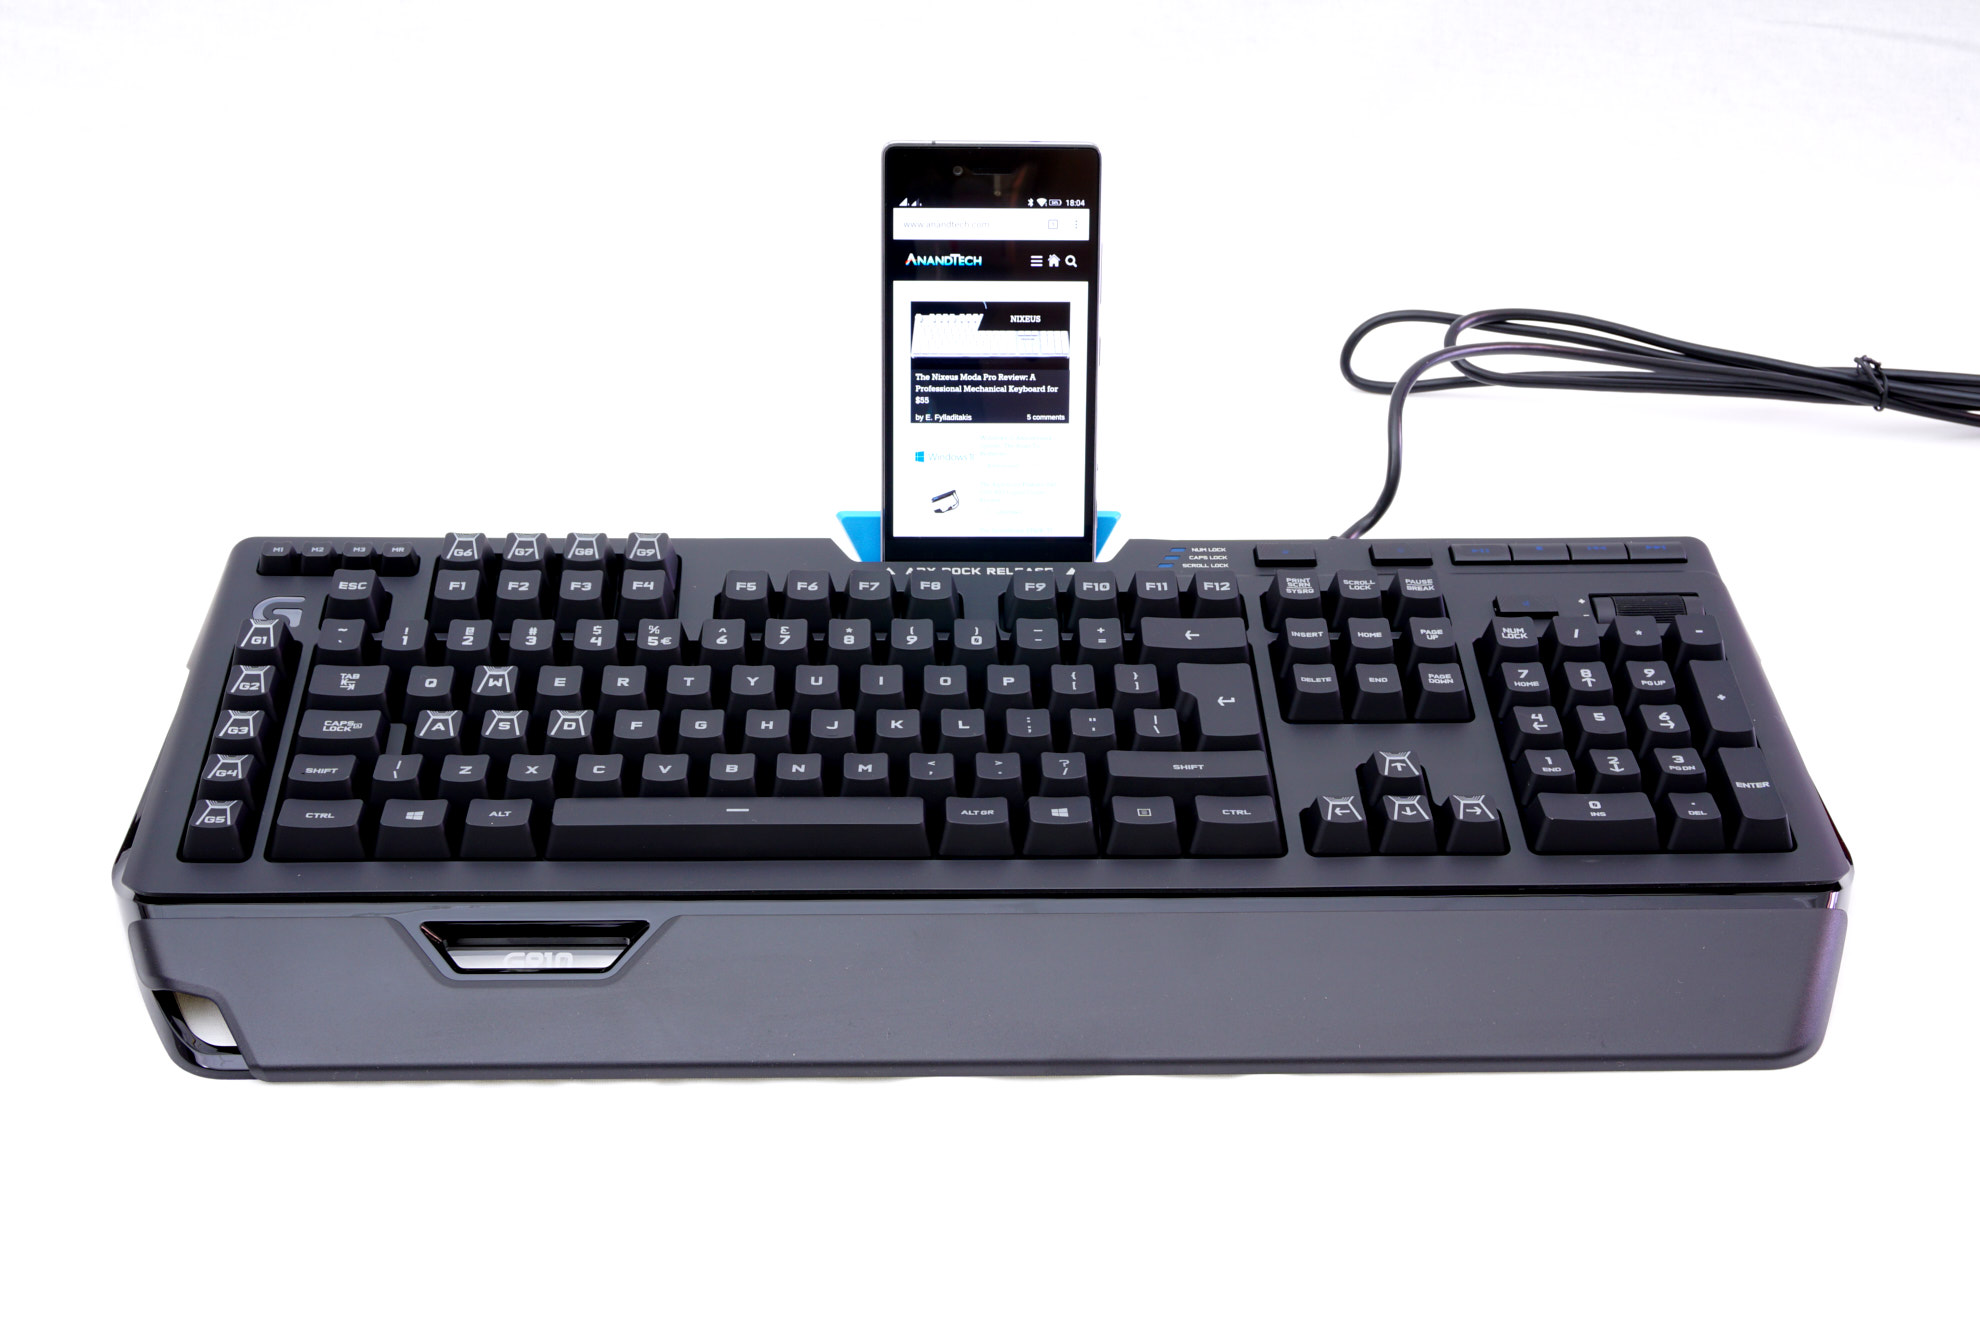 The Logitech Spectrum Mechanical Gaming Keyboard - The Logitech G910 Orion Mechanical Keyboard Review